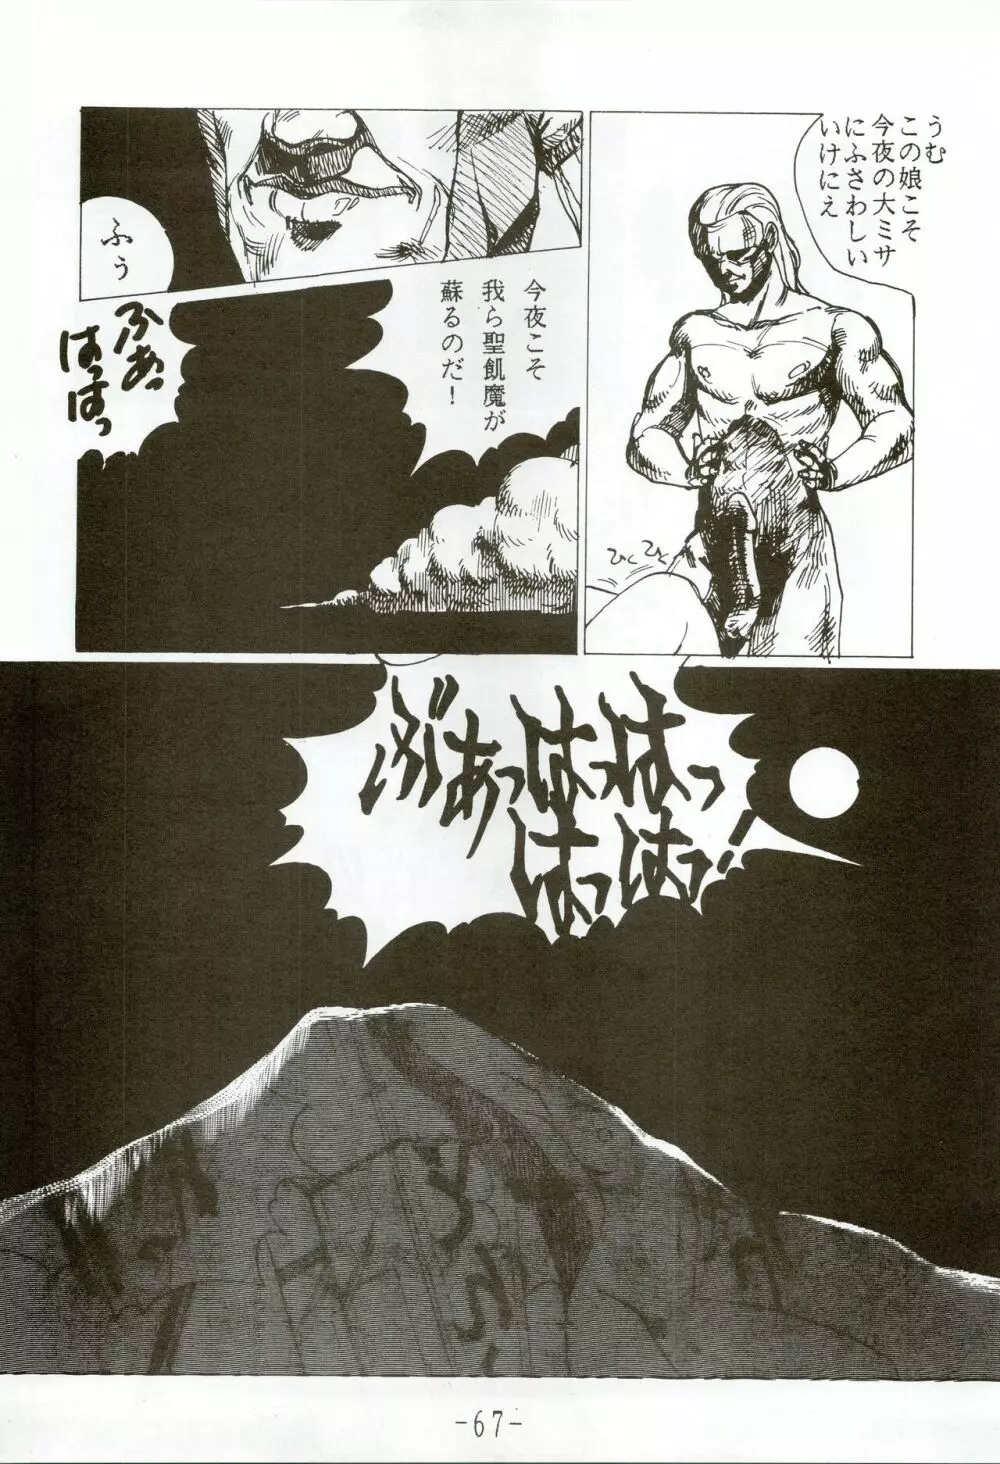 甲冑伝説 - page67